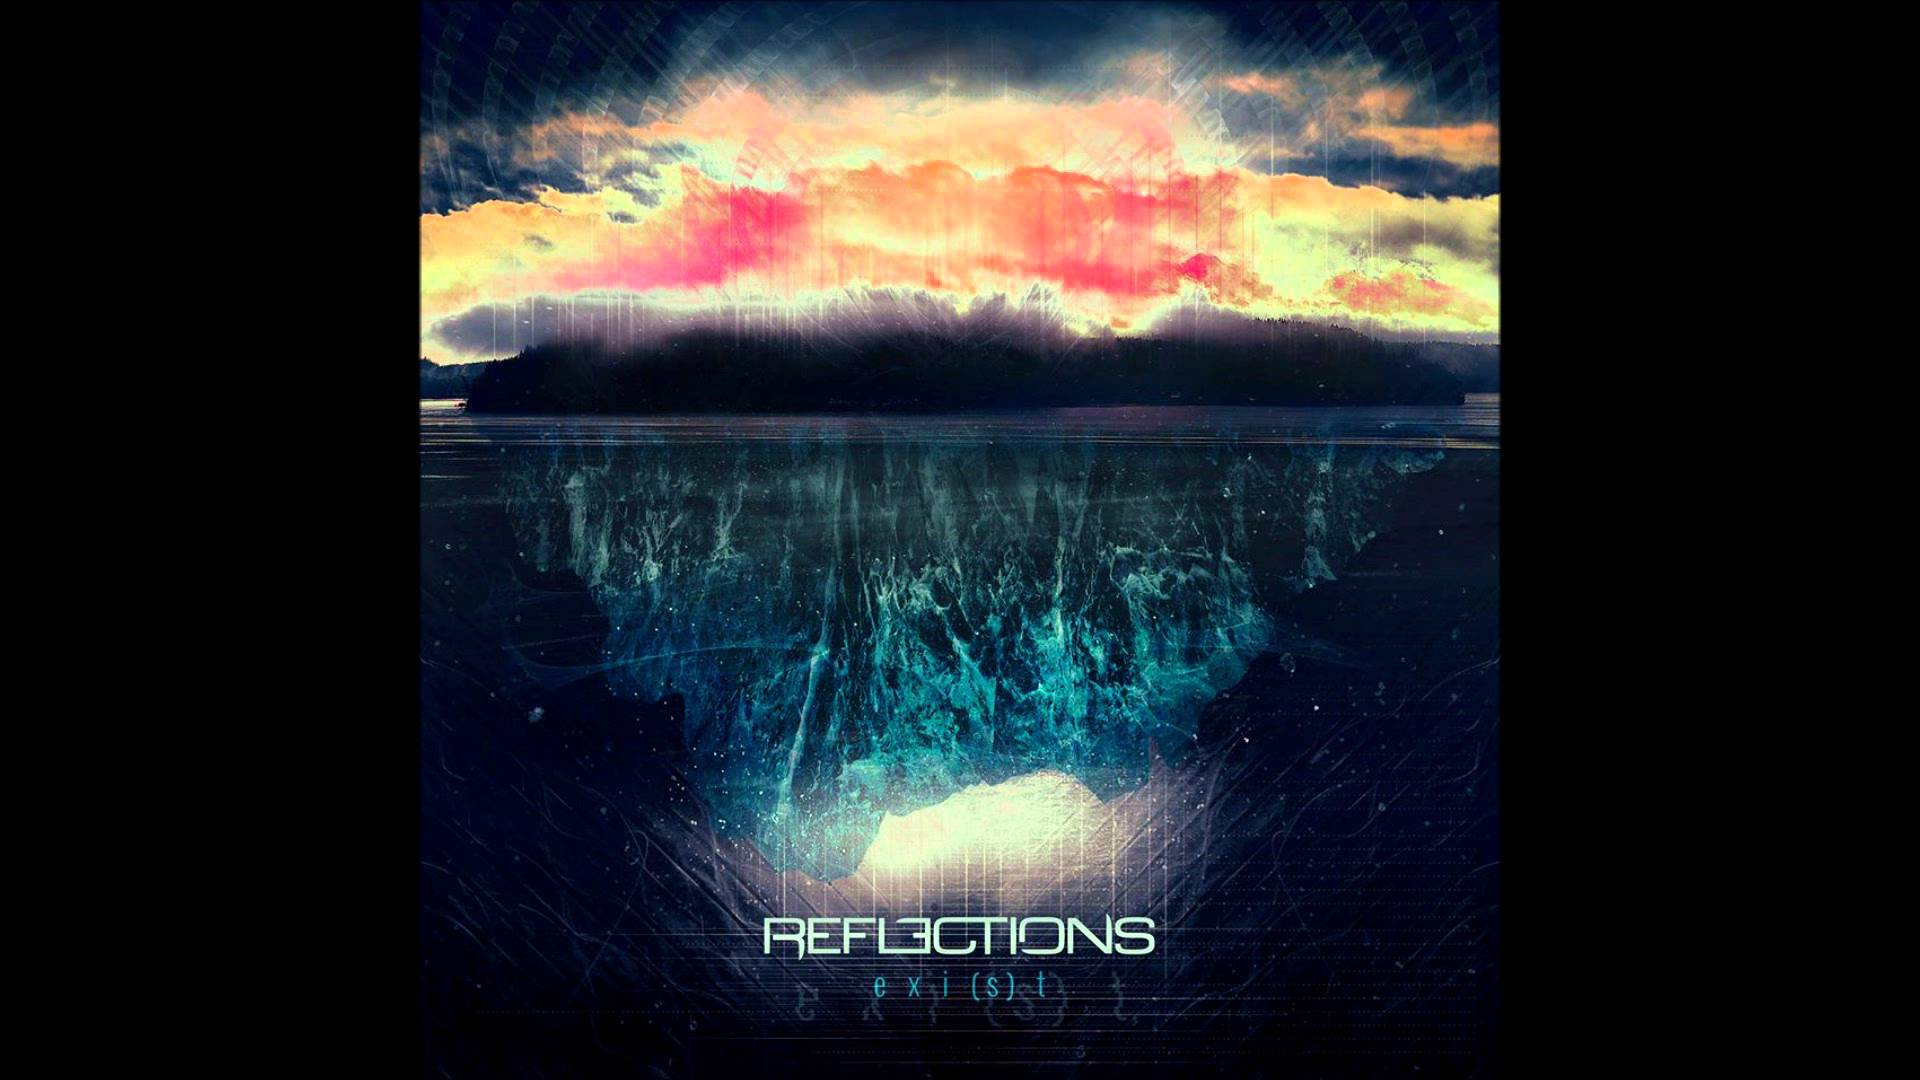 Reflections - exi(s)t (FULL ALBUM) - YouTube